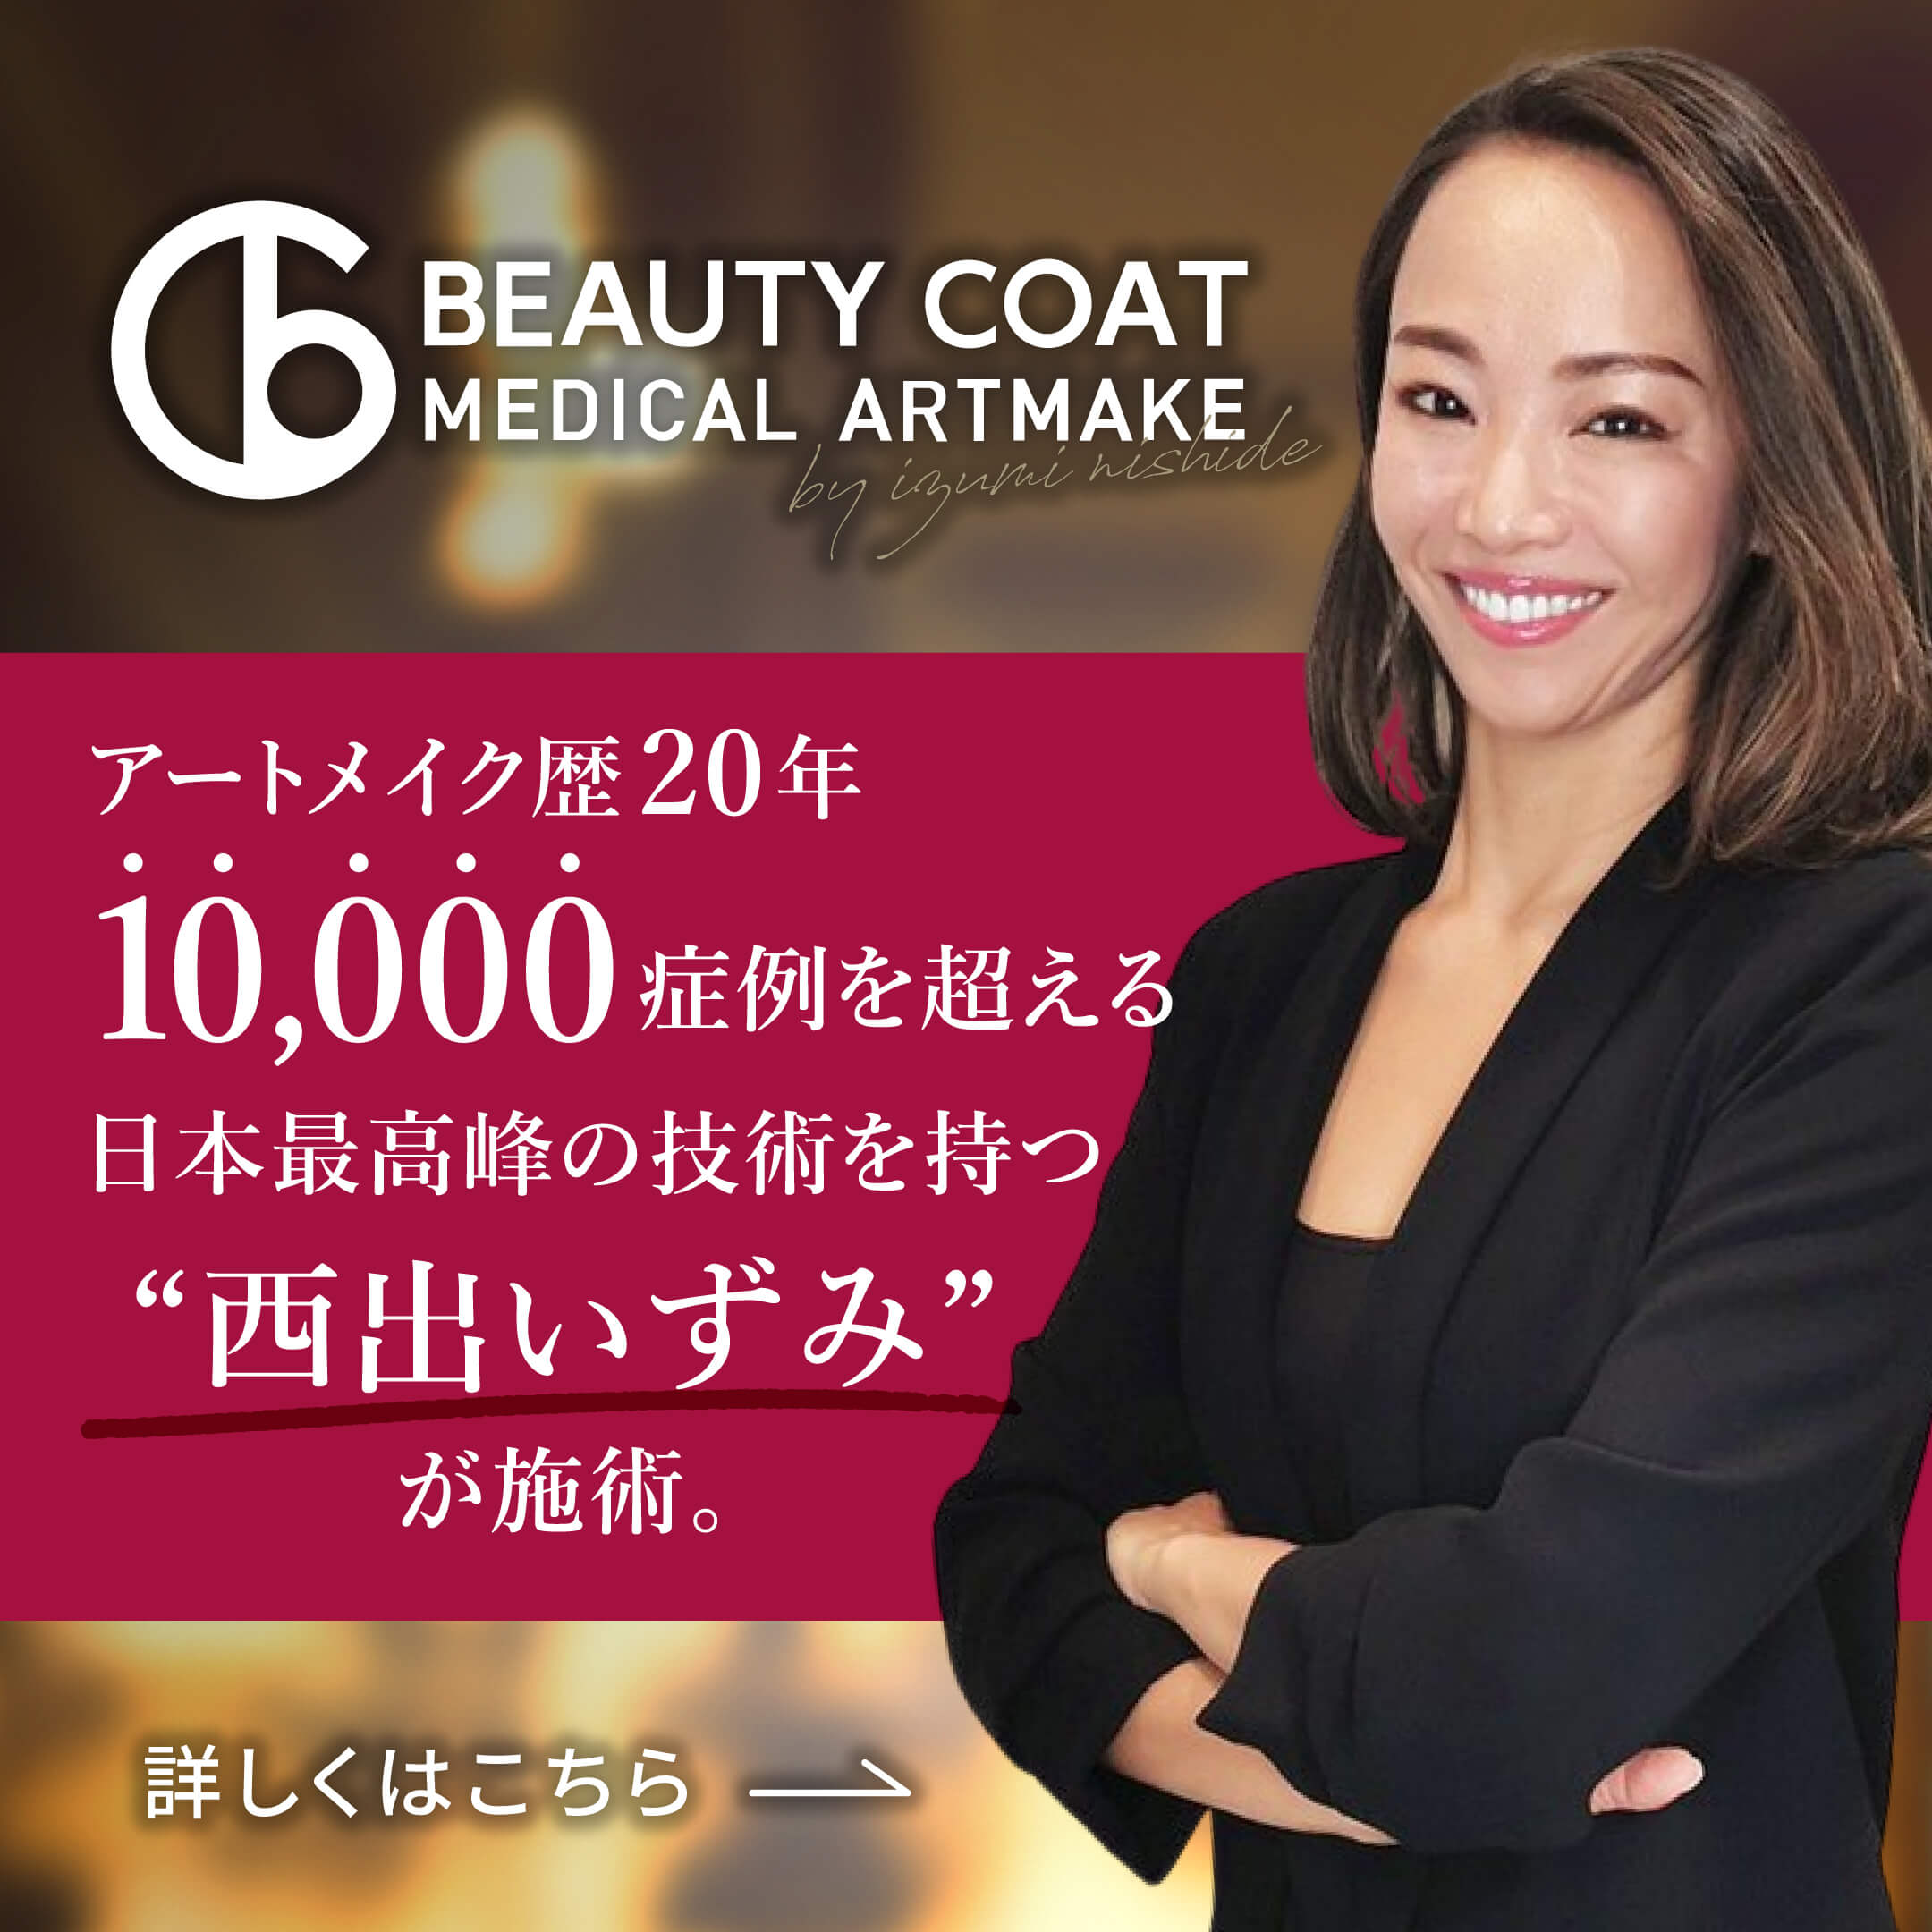 BREATY COAT MEDICAL ARTMAKE 5,000症例を超える日本最高峰の技術を持つ西出いずみが施術